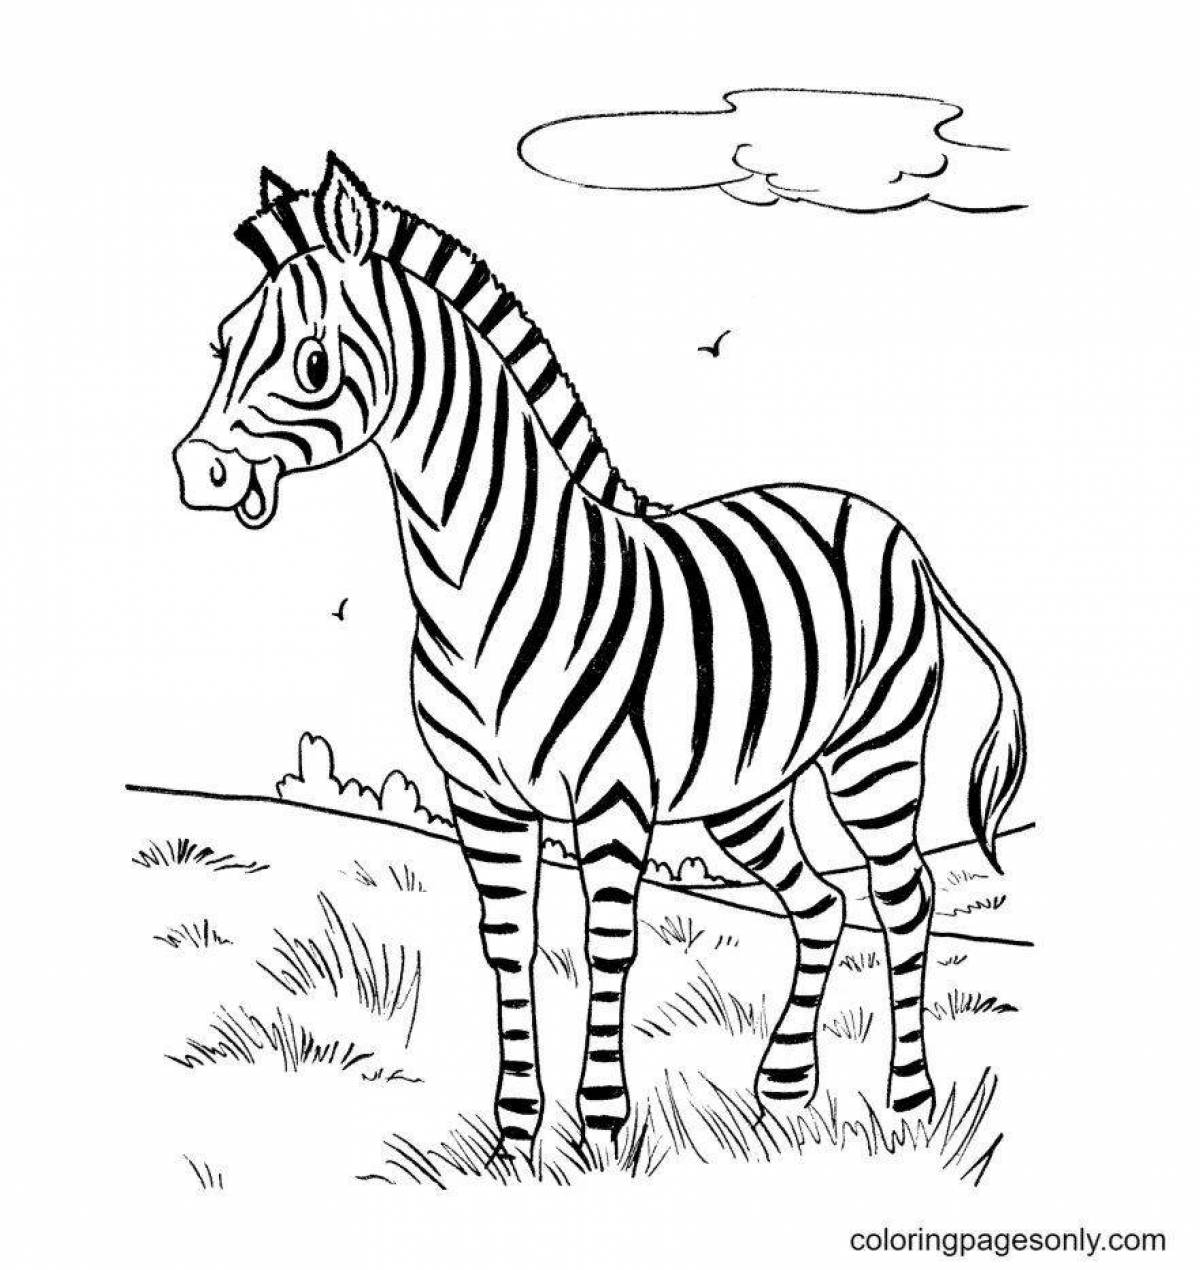 Violent zebra pattern